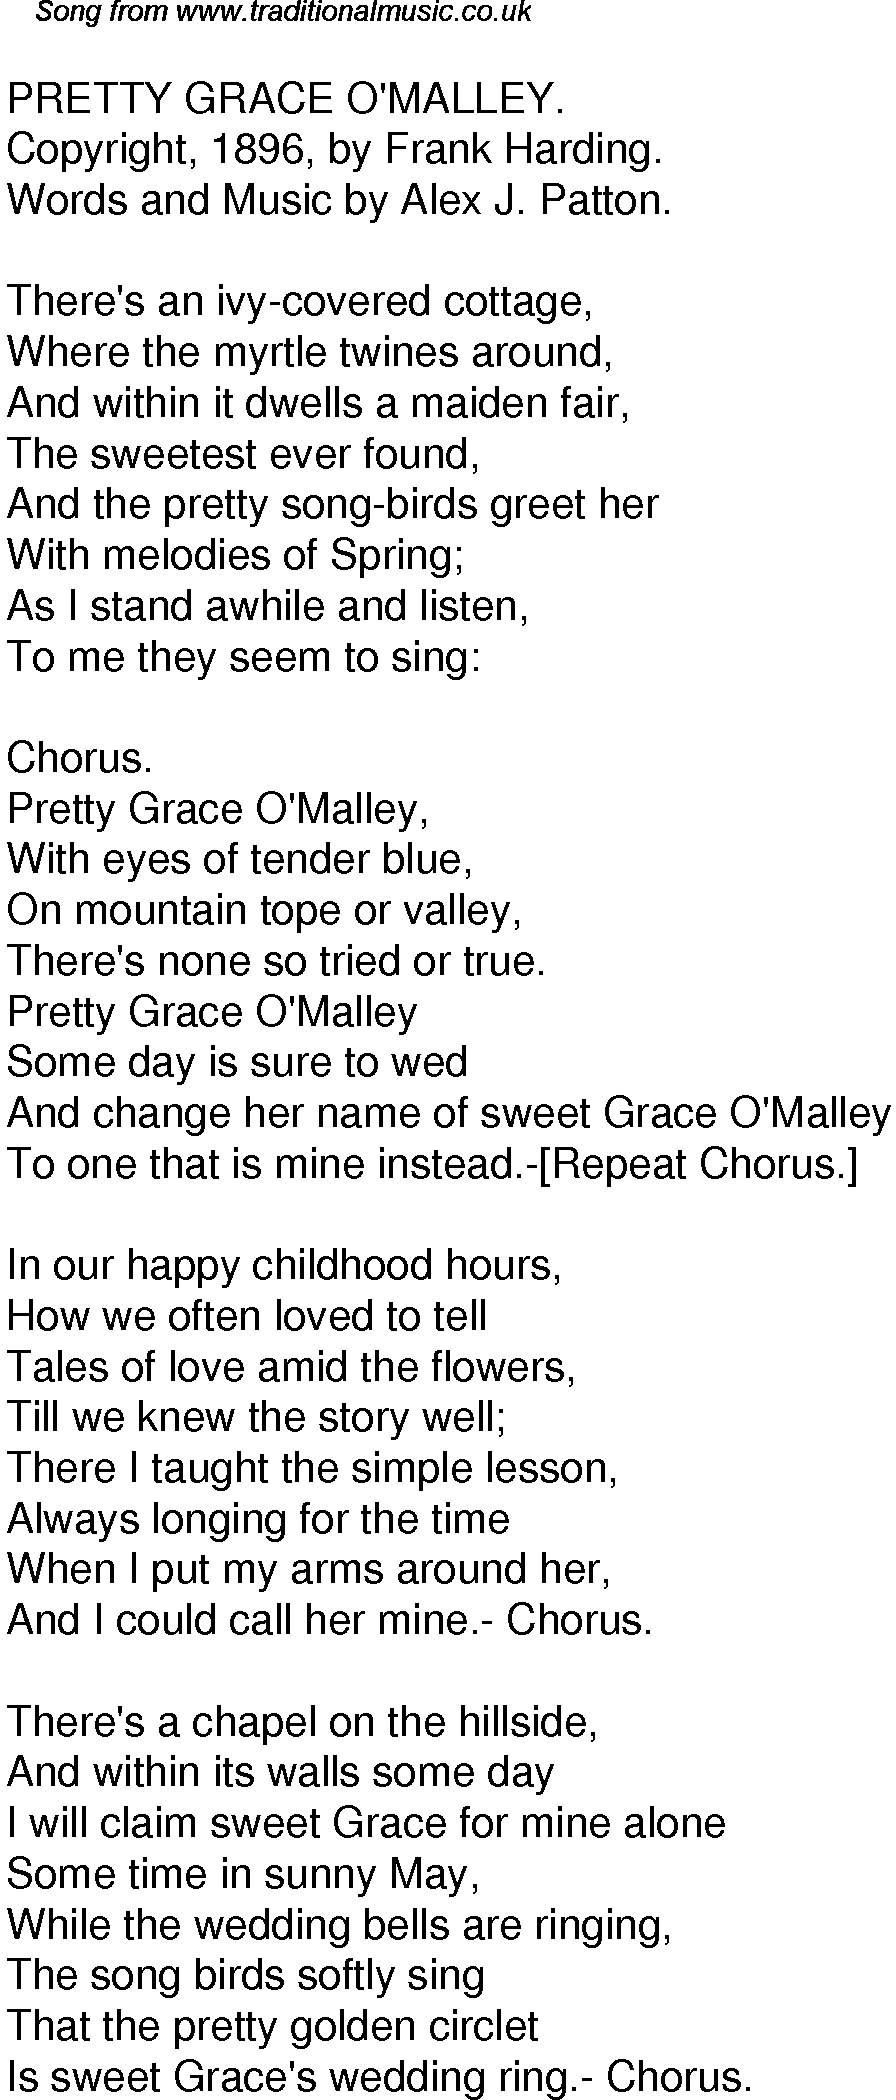 Grace o/malley song